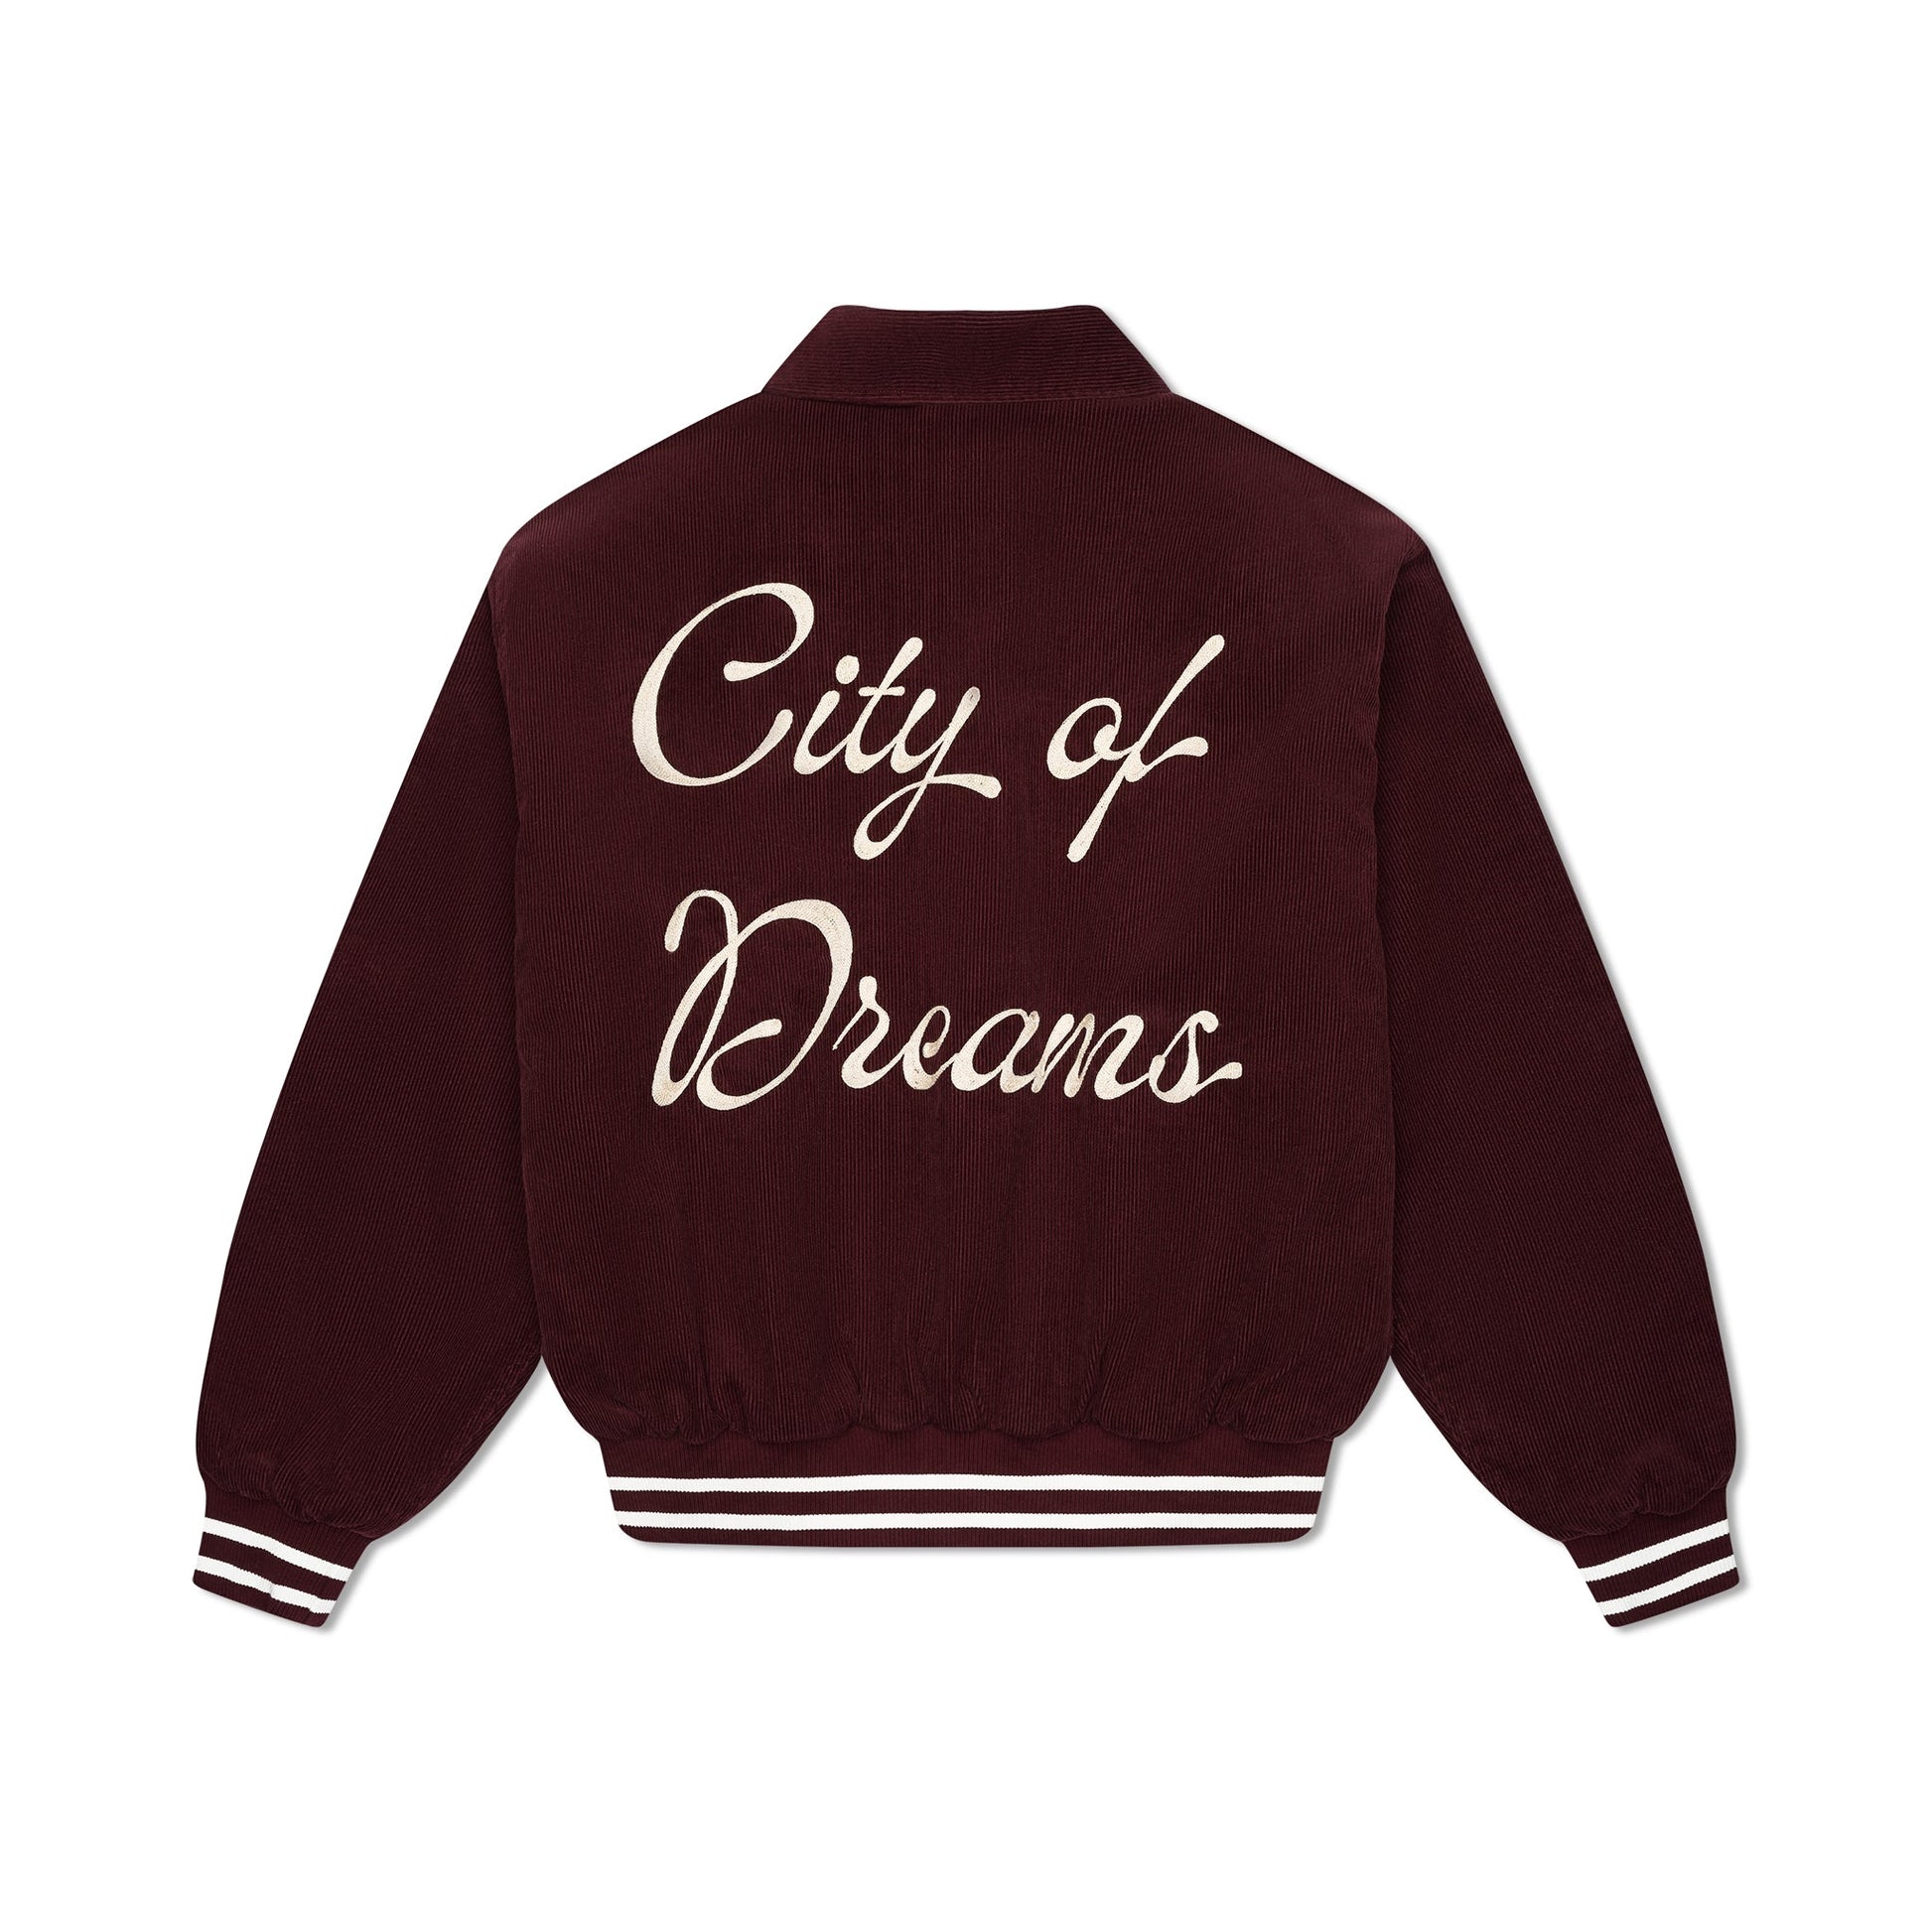 Maroon "City of Dreams" Corduroy Jacket - Minted New York